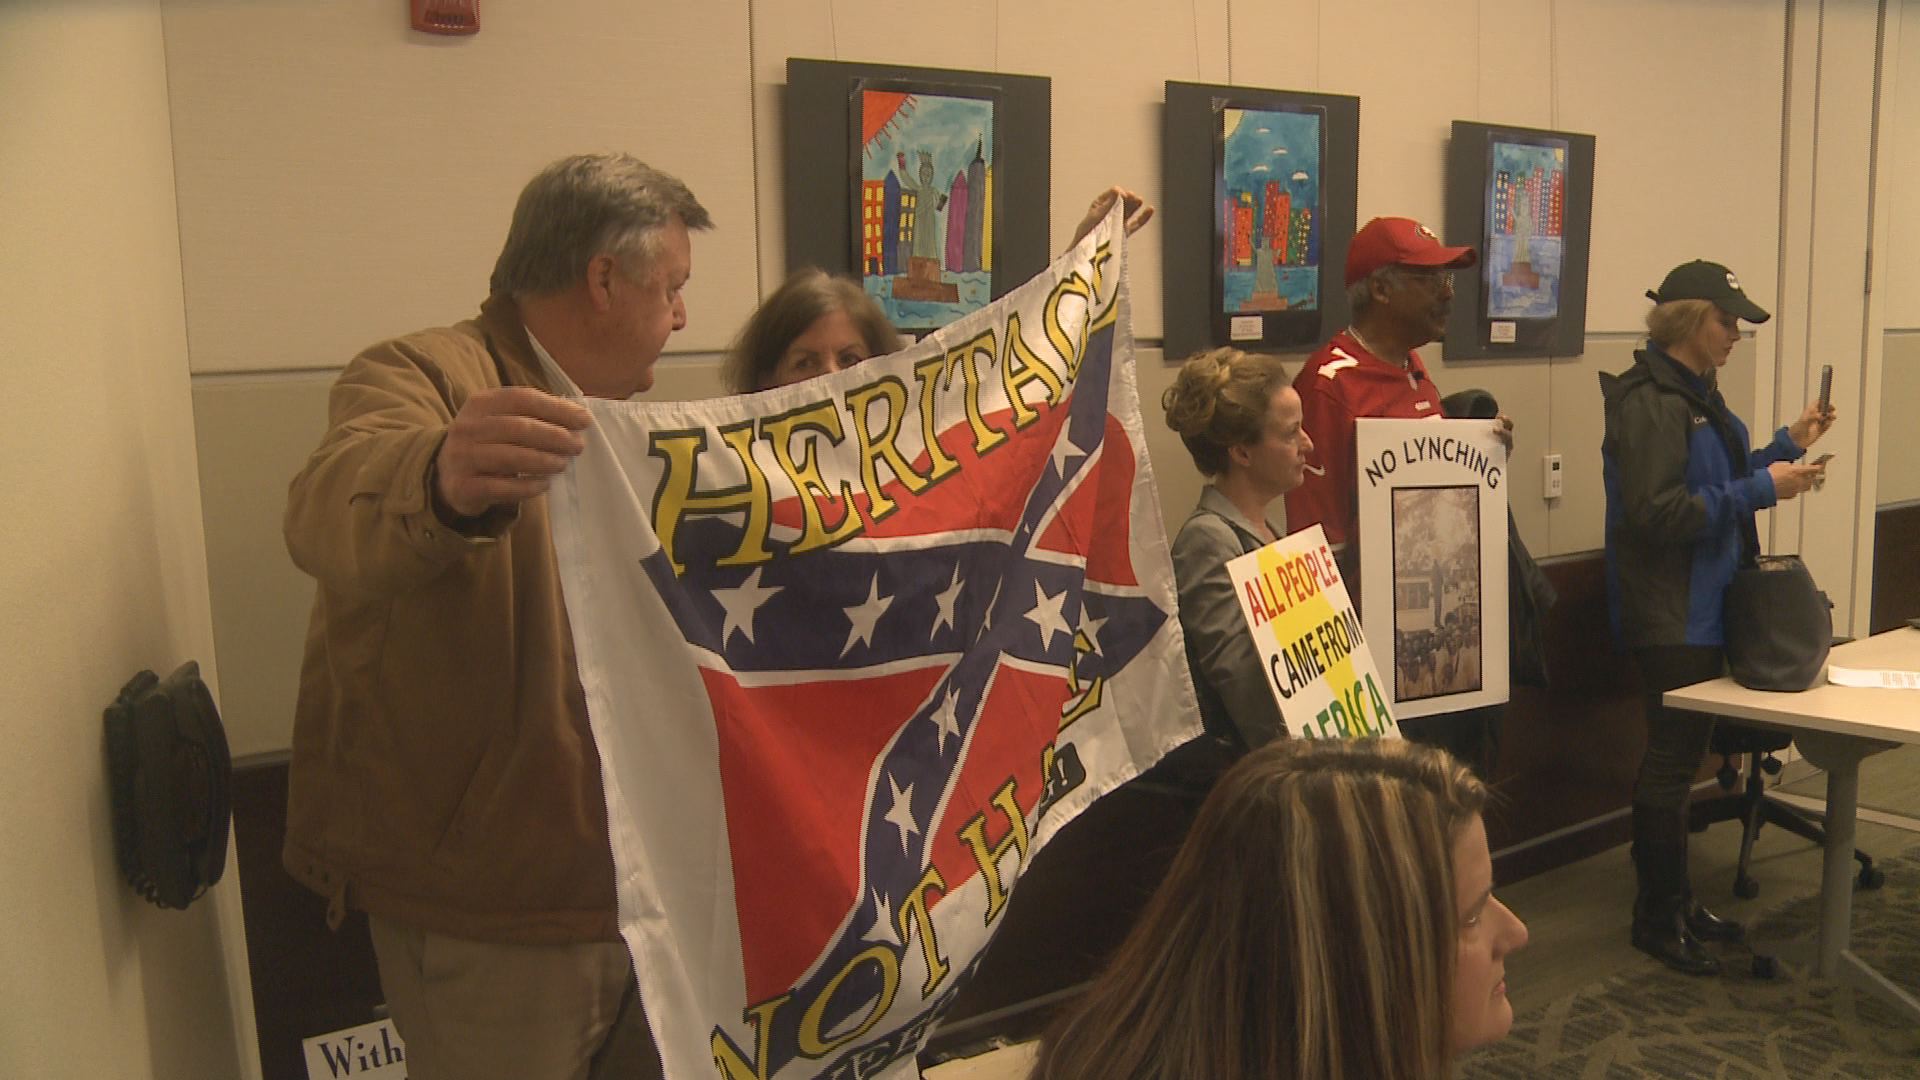 Classroom Confederate flag controversy pushes teacher to retire - ABC10.com